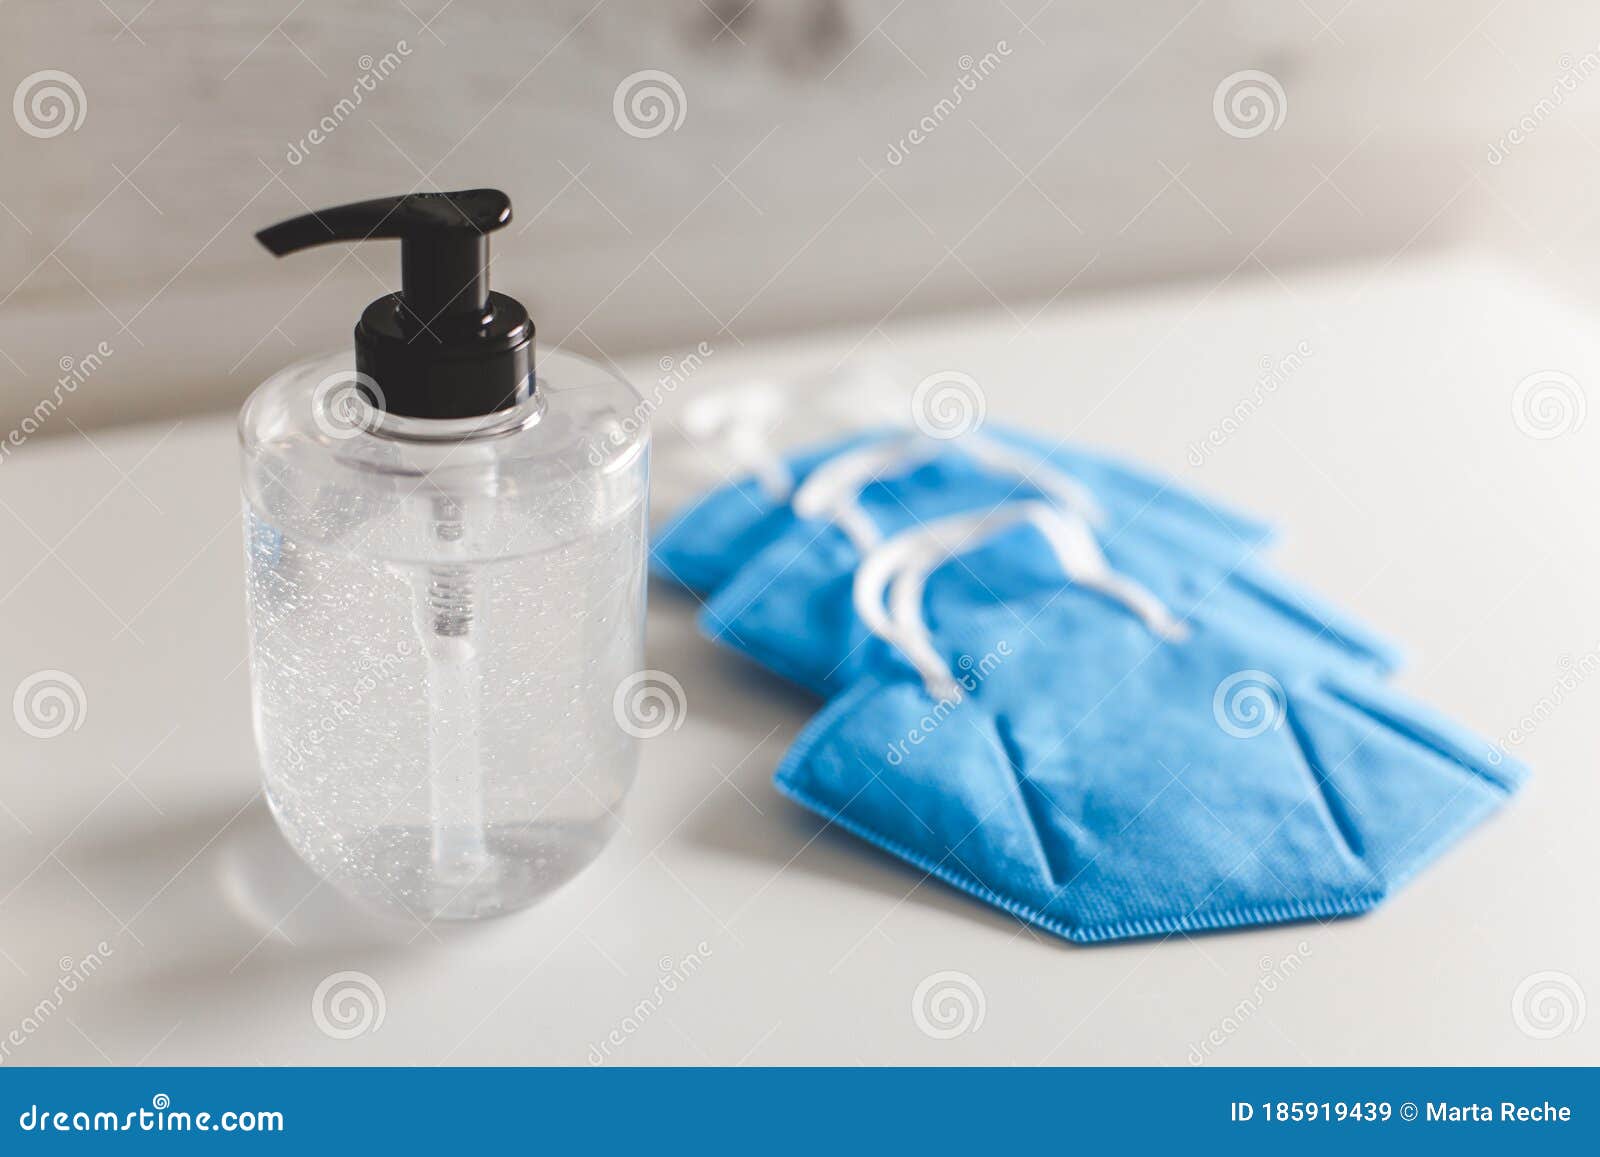 coronavirus prevention ffp2 masks and hand sanitizer alcohol gel